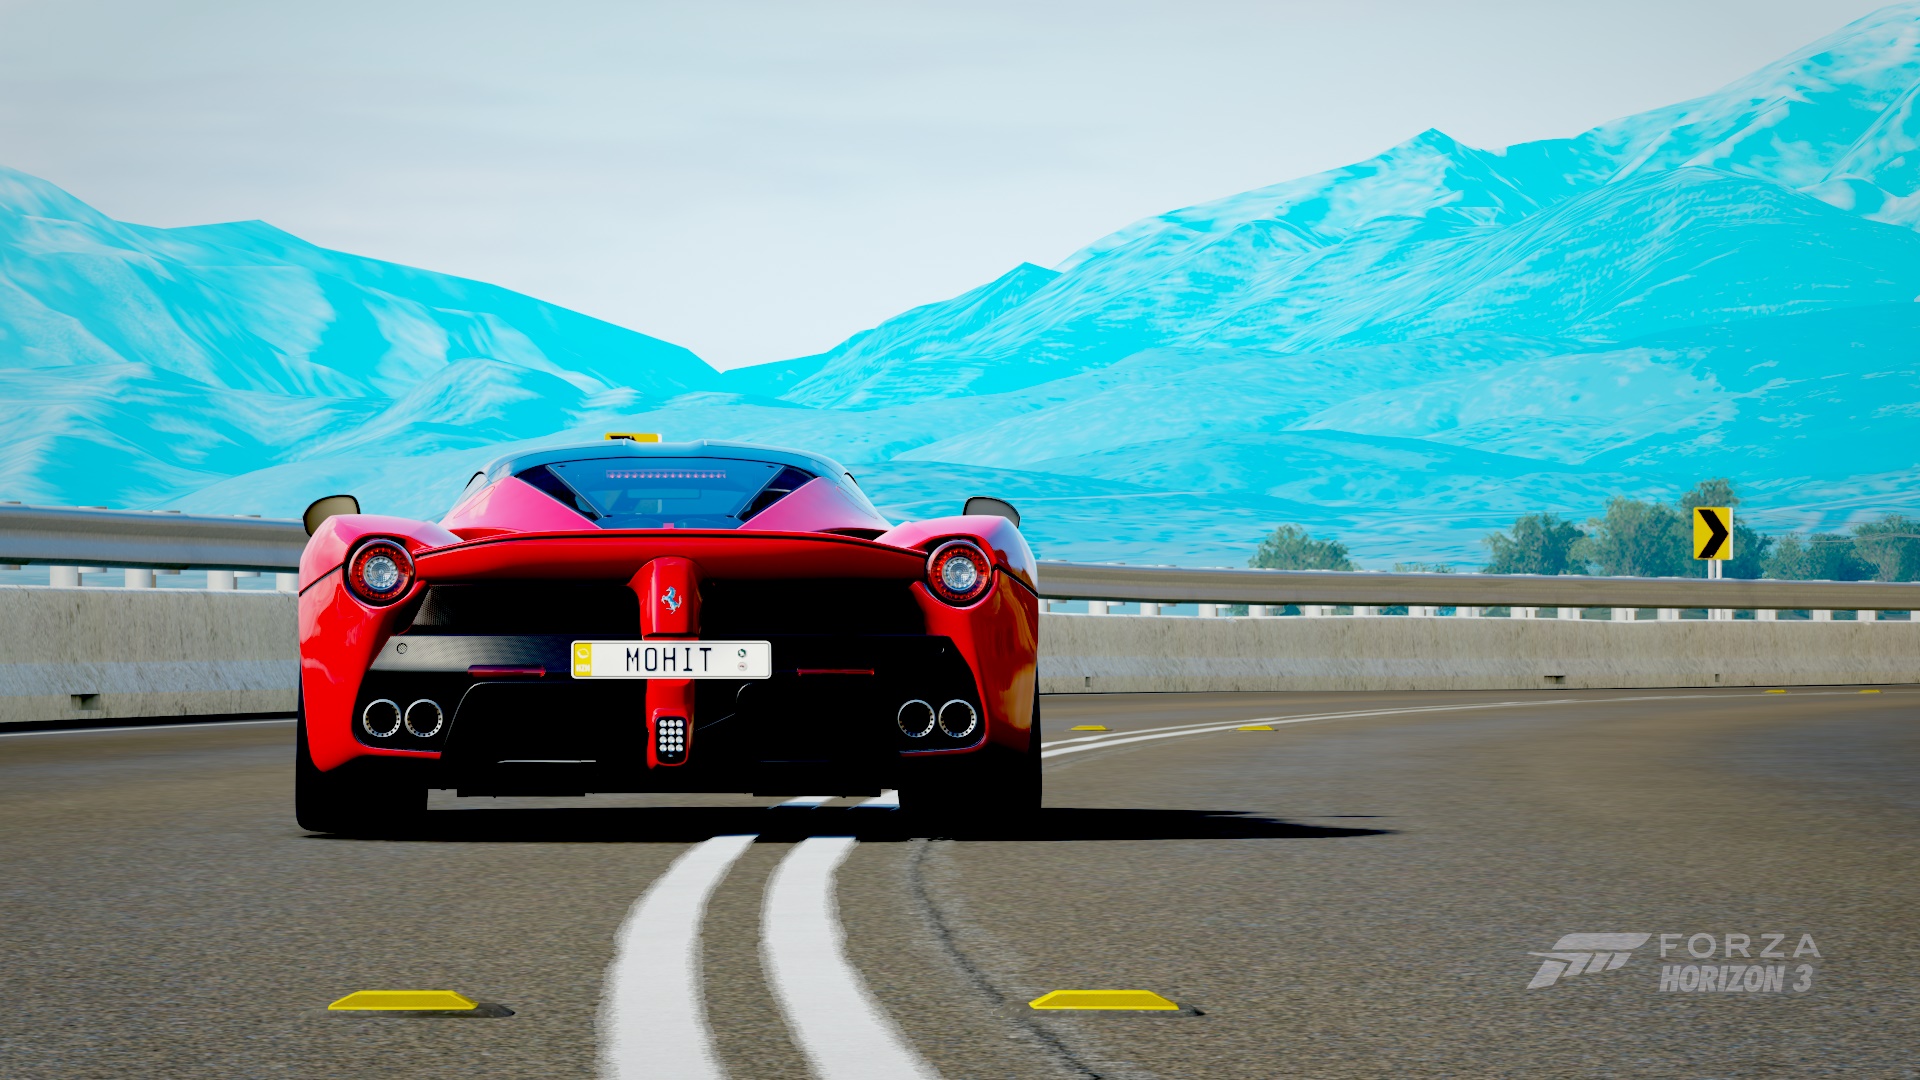 Descarga gratuita de fondo de pantalla para móvil de Coche, Fuerza, Videojuego, Ferrari La Ferrari, Forza Horizon 3.